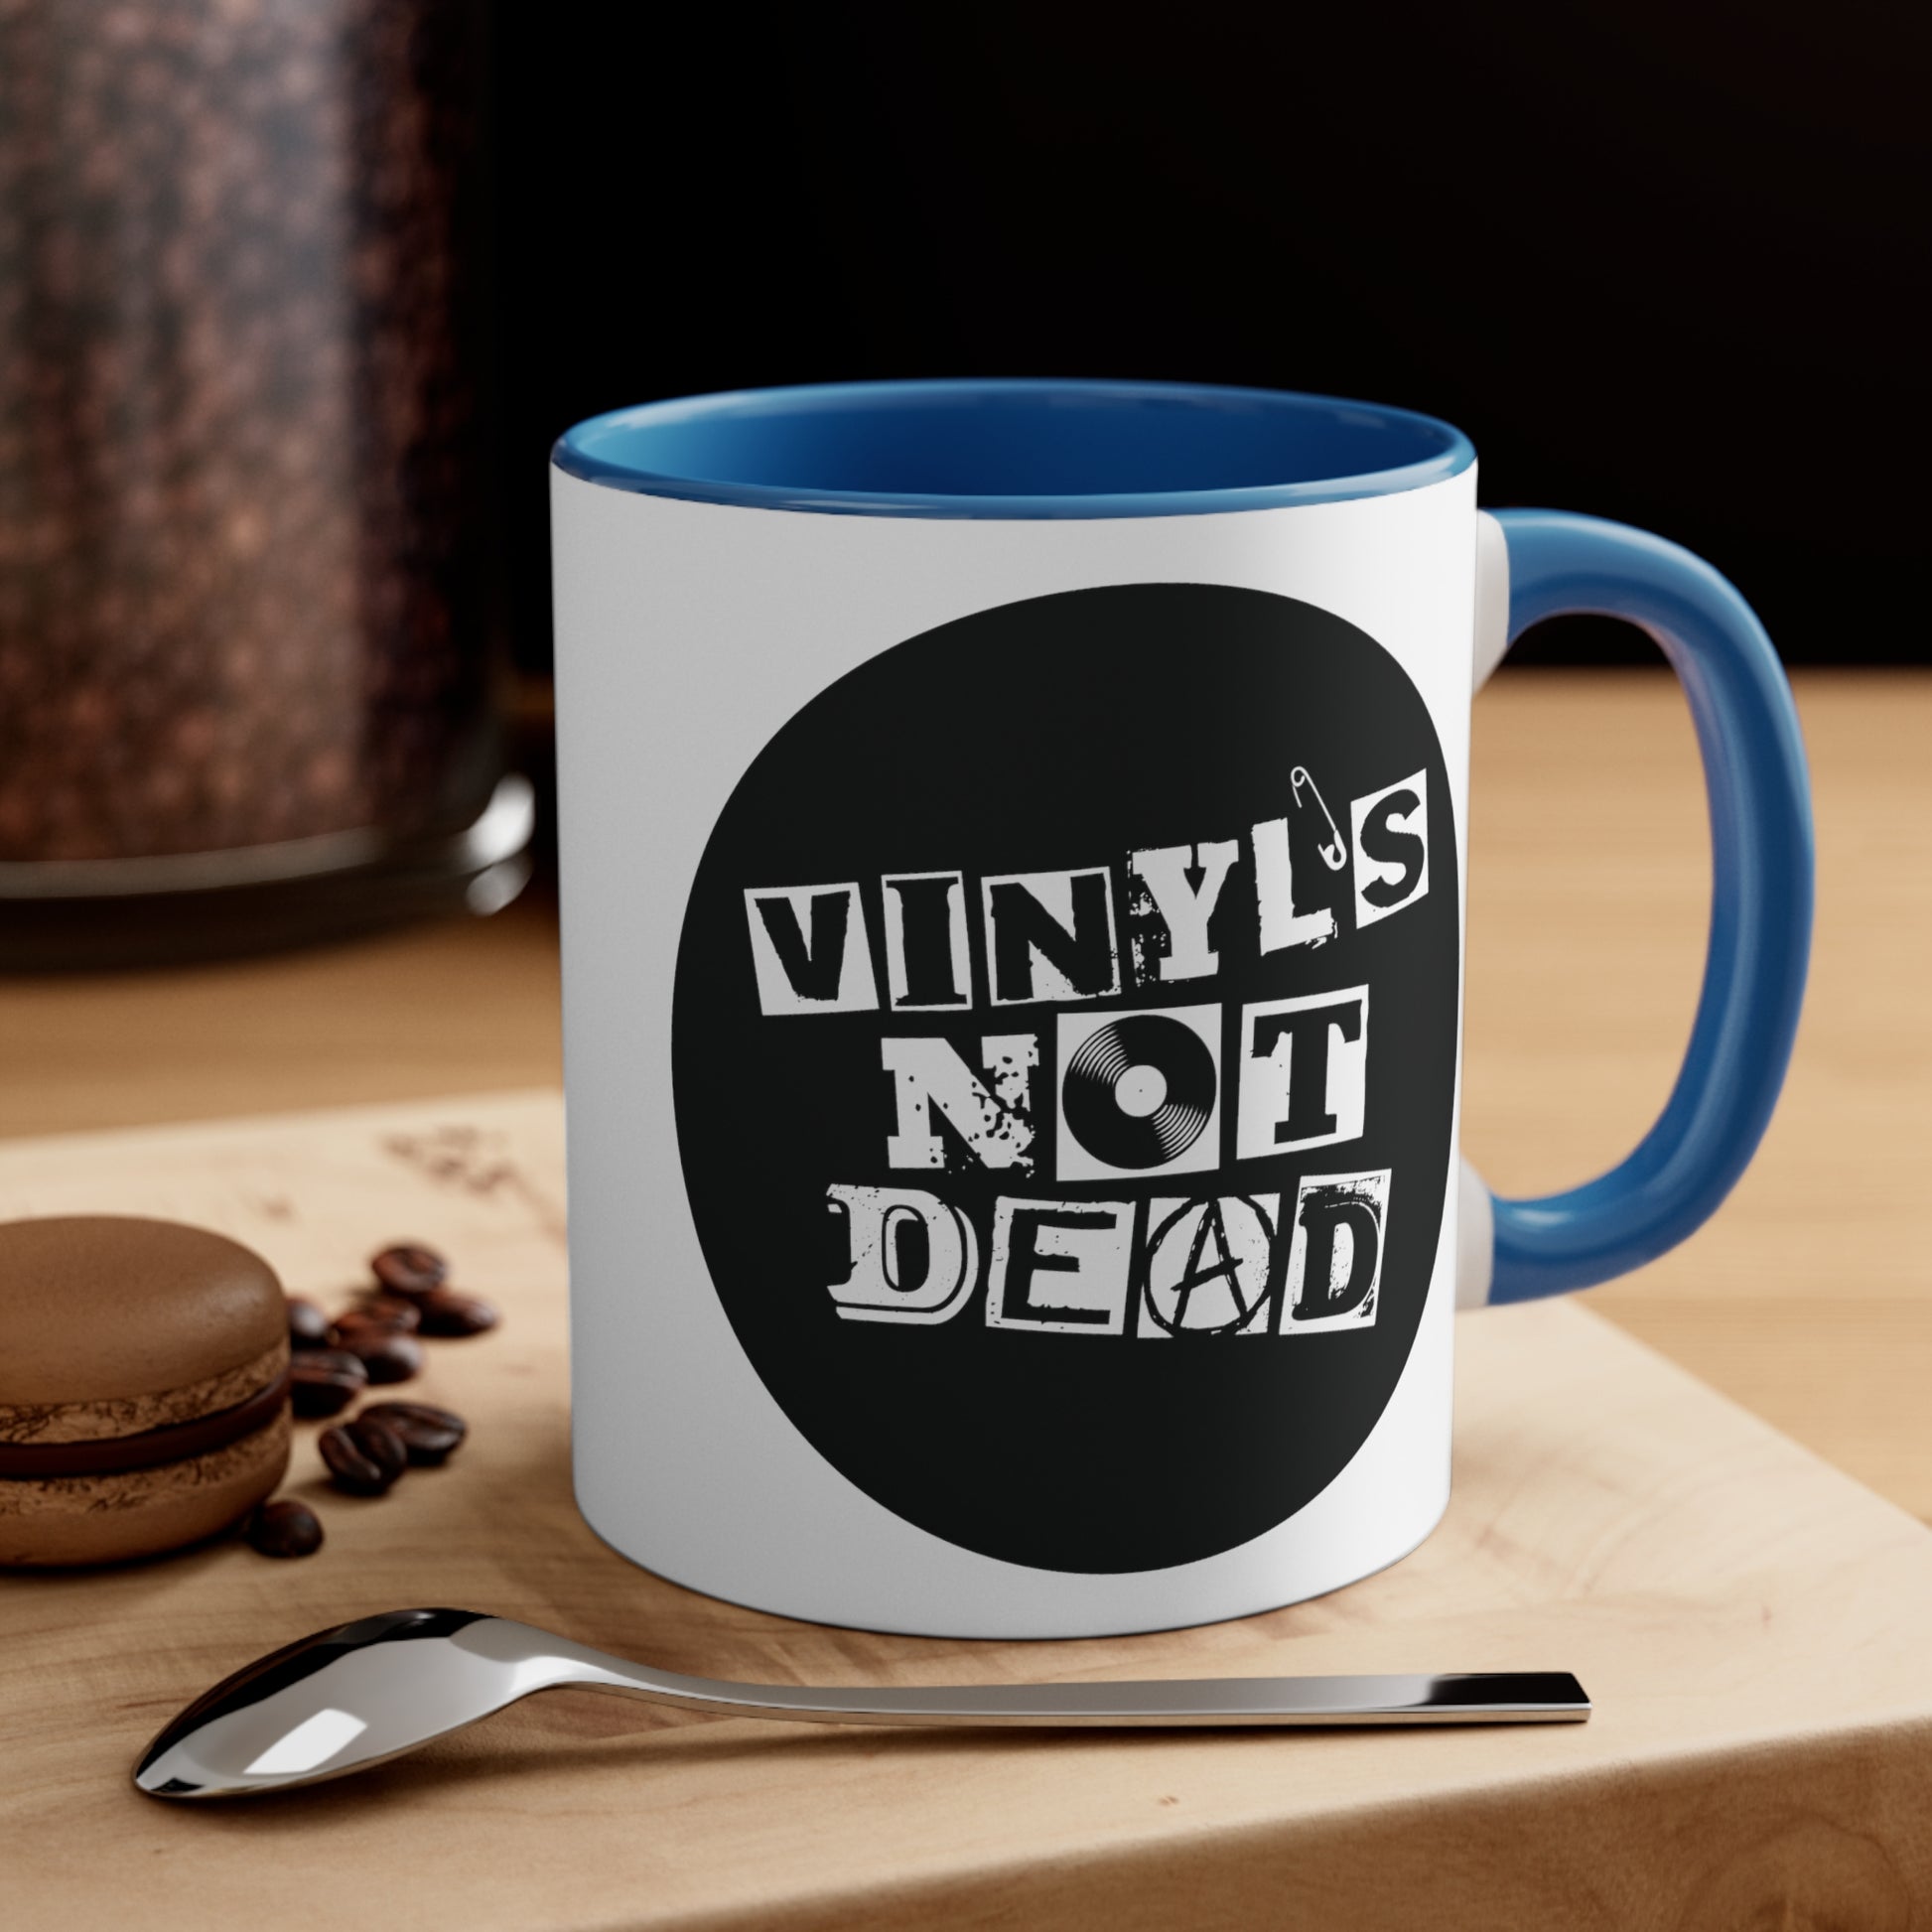 Vinyl Record Themed 11oz Accent Coffee Mug - Vinyl is Not Dead Light Blue